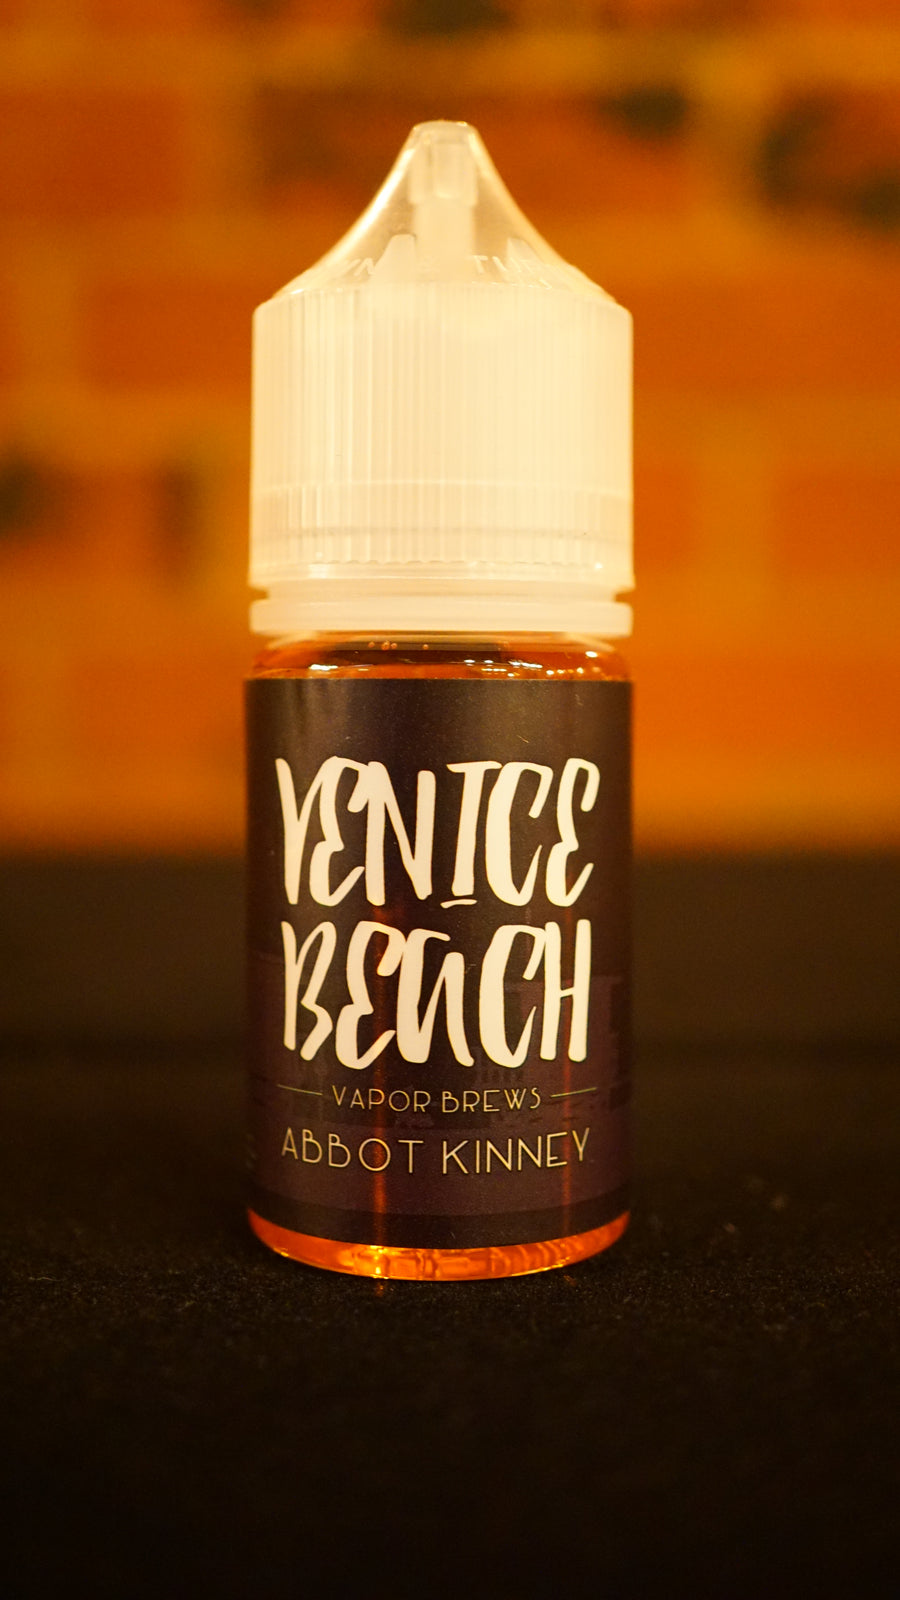 Abbott Kinney by Venice Beach Vapor Brews